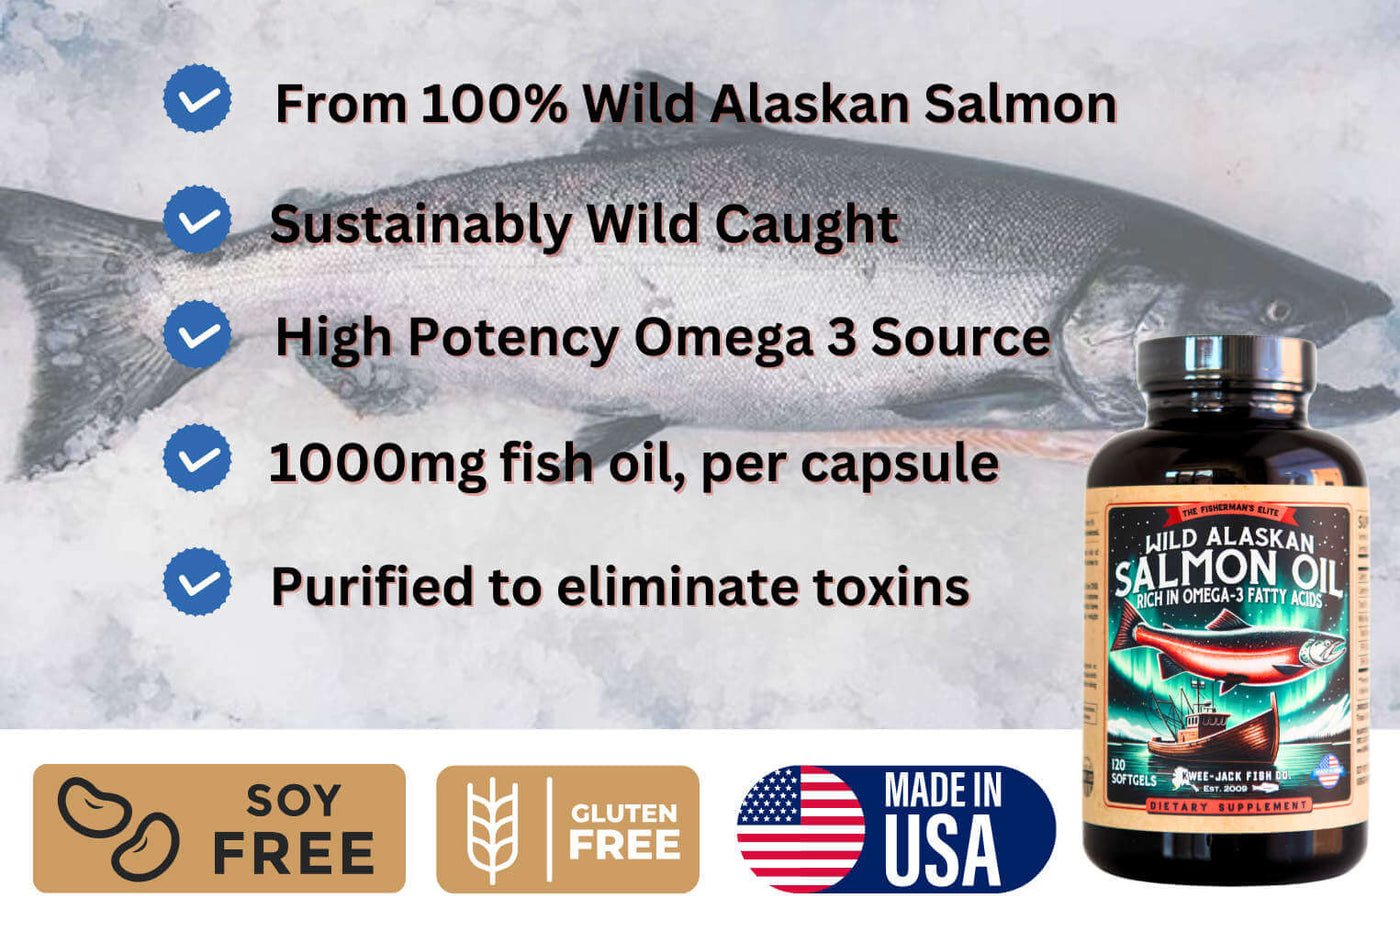 Kwee-Jack Fish Co. Wild Alaskan Salmon Fish Oil Omega 3 Supplement 120 Softgels 1000mg Salmon Oil per Capsule | anti-inflammation, Brain, Heart, Joint